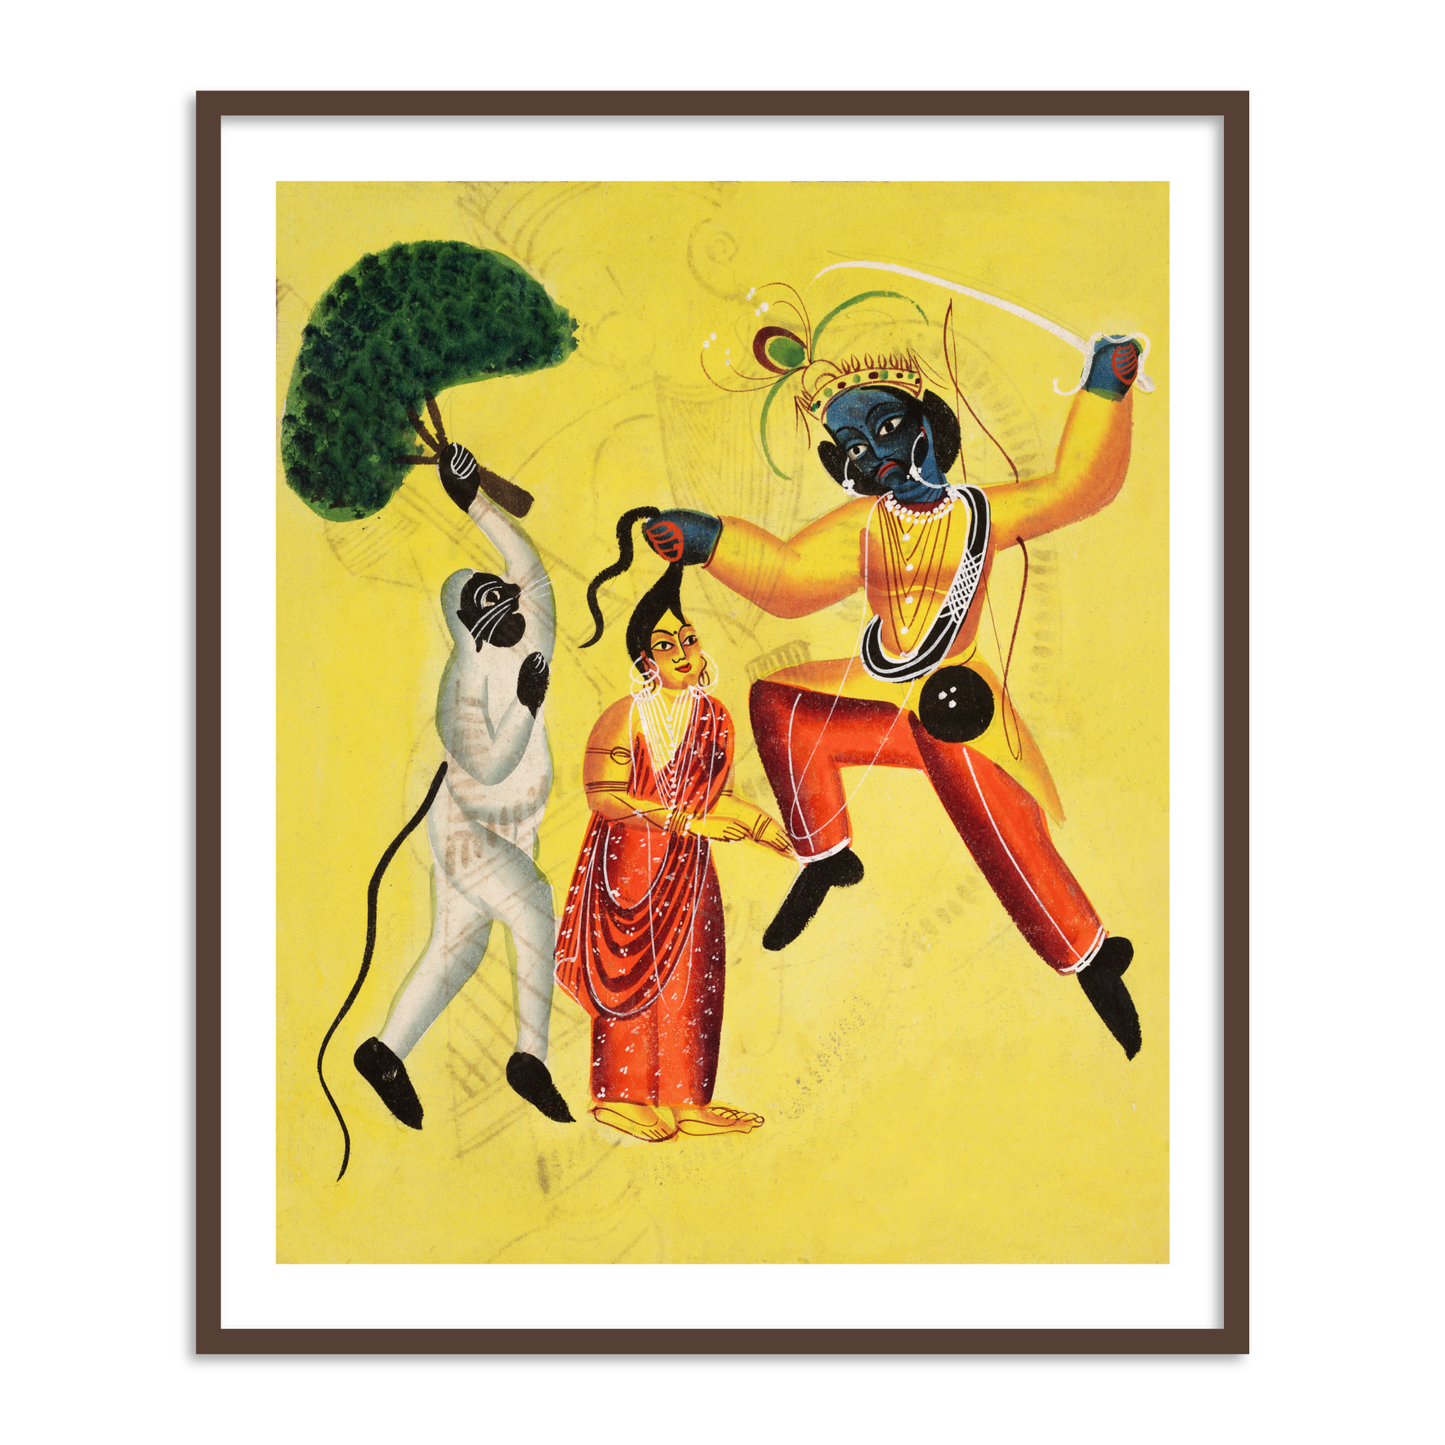 Rama and Hanuman Kailghat Framed Wall Art